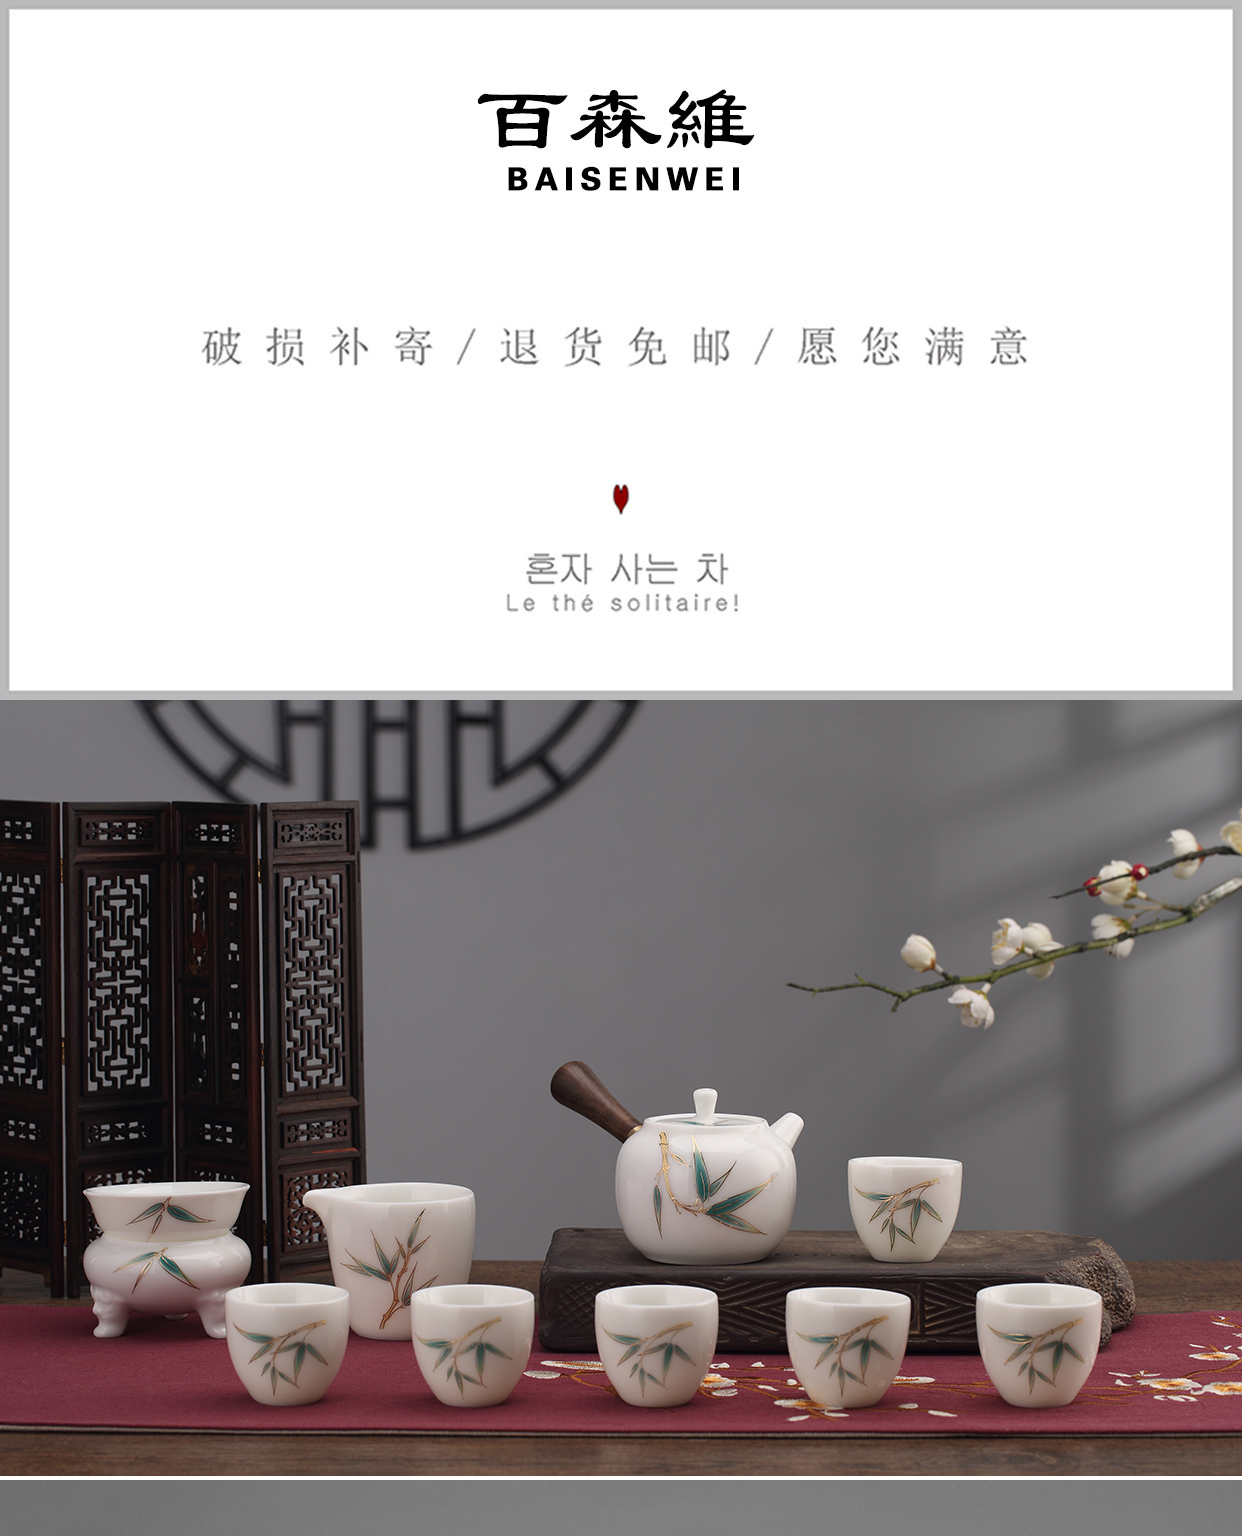 Dehua white porcelain paint suet jade bamboo tureen tea sets ceramic contracted side put the pot of kung fu tea gift box